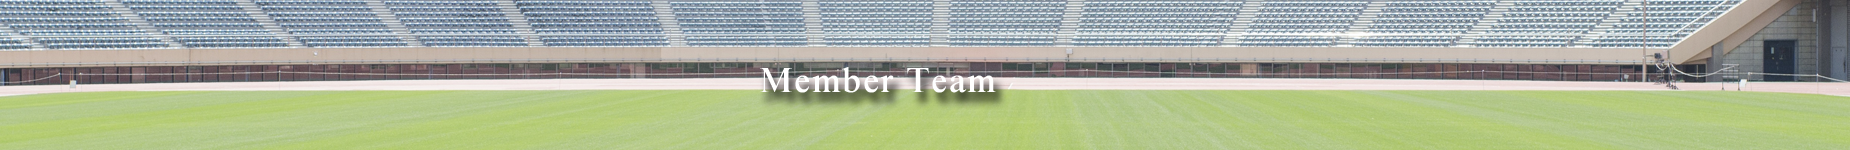 Member Team 長野県クラブユースサッカー連盟